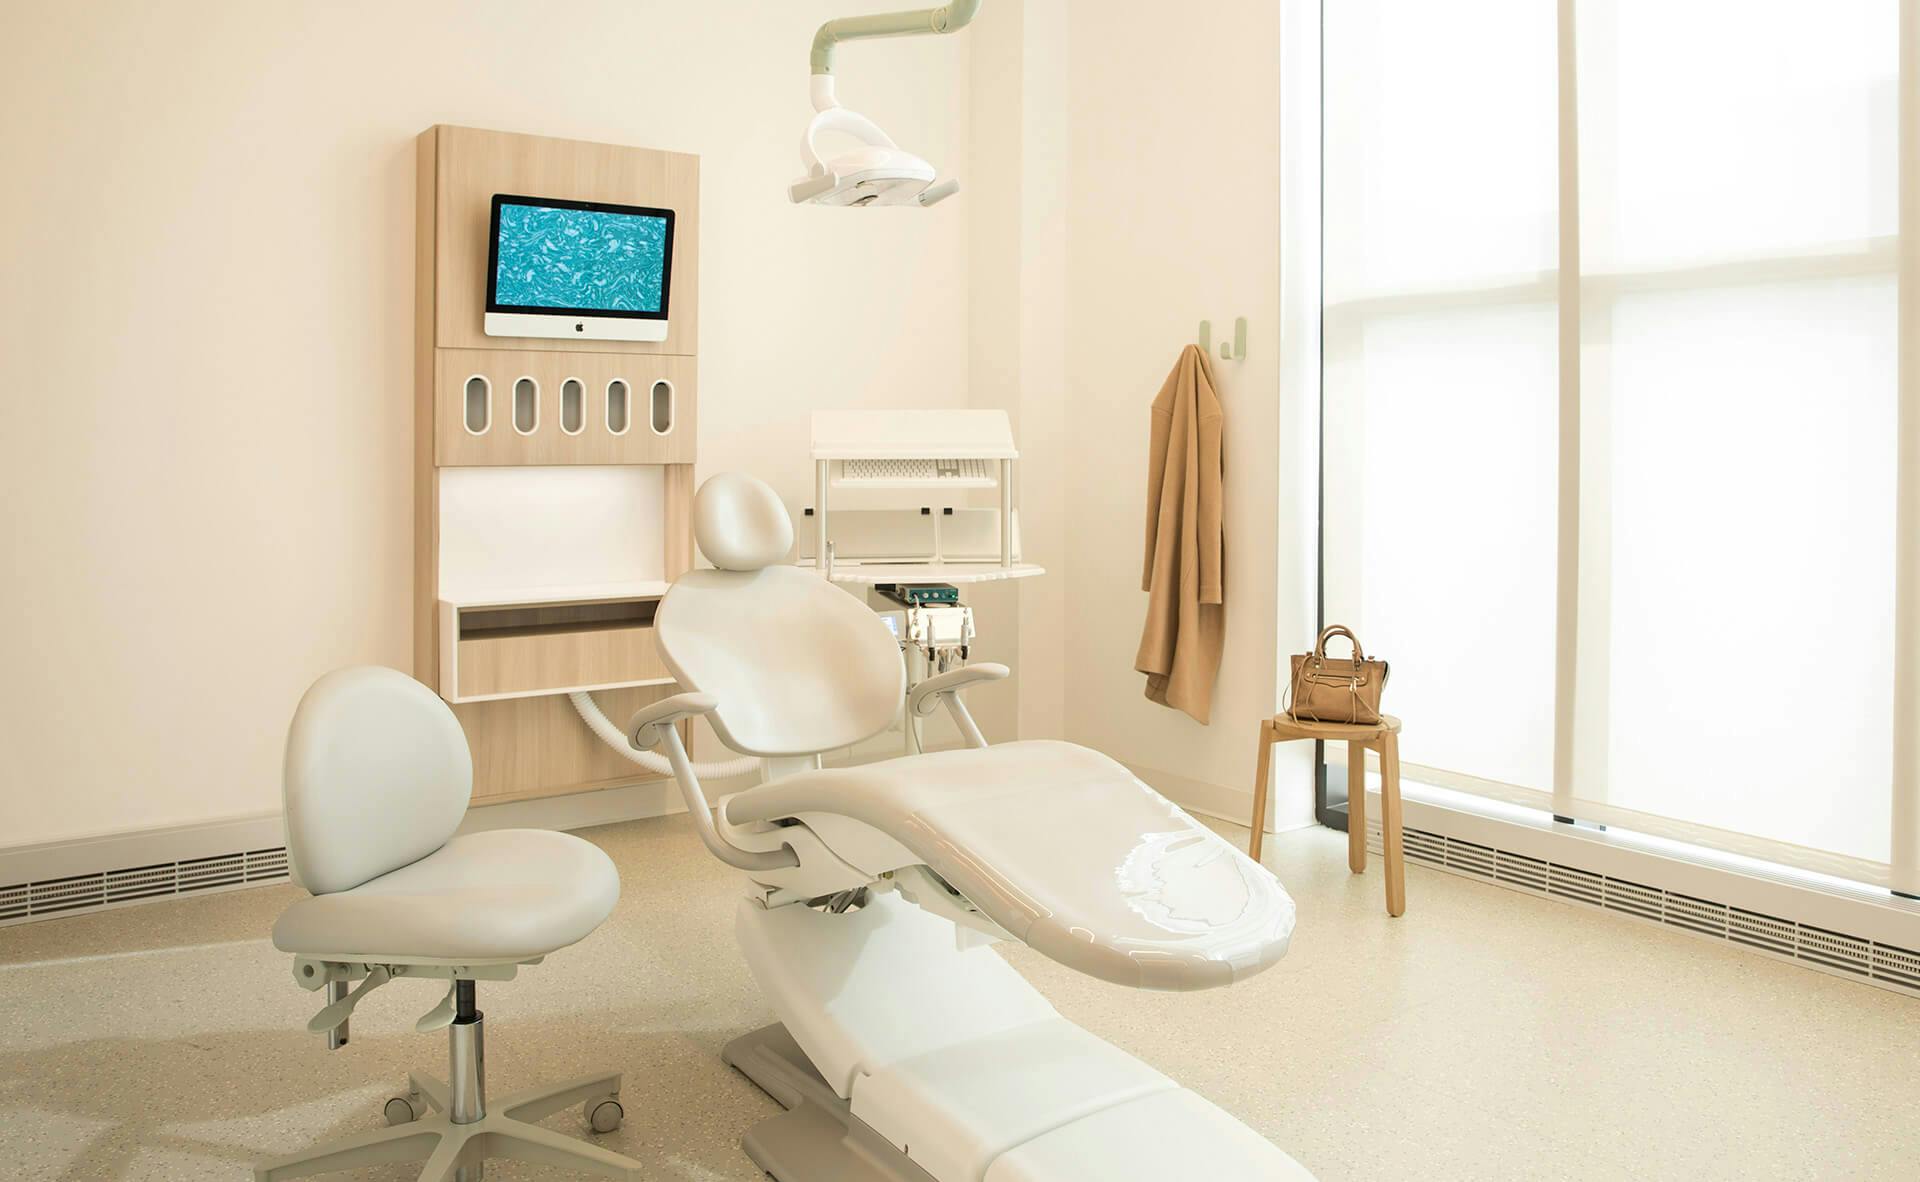 Dental chair and tv screen in Tend dental studio